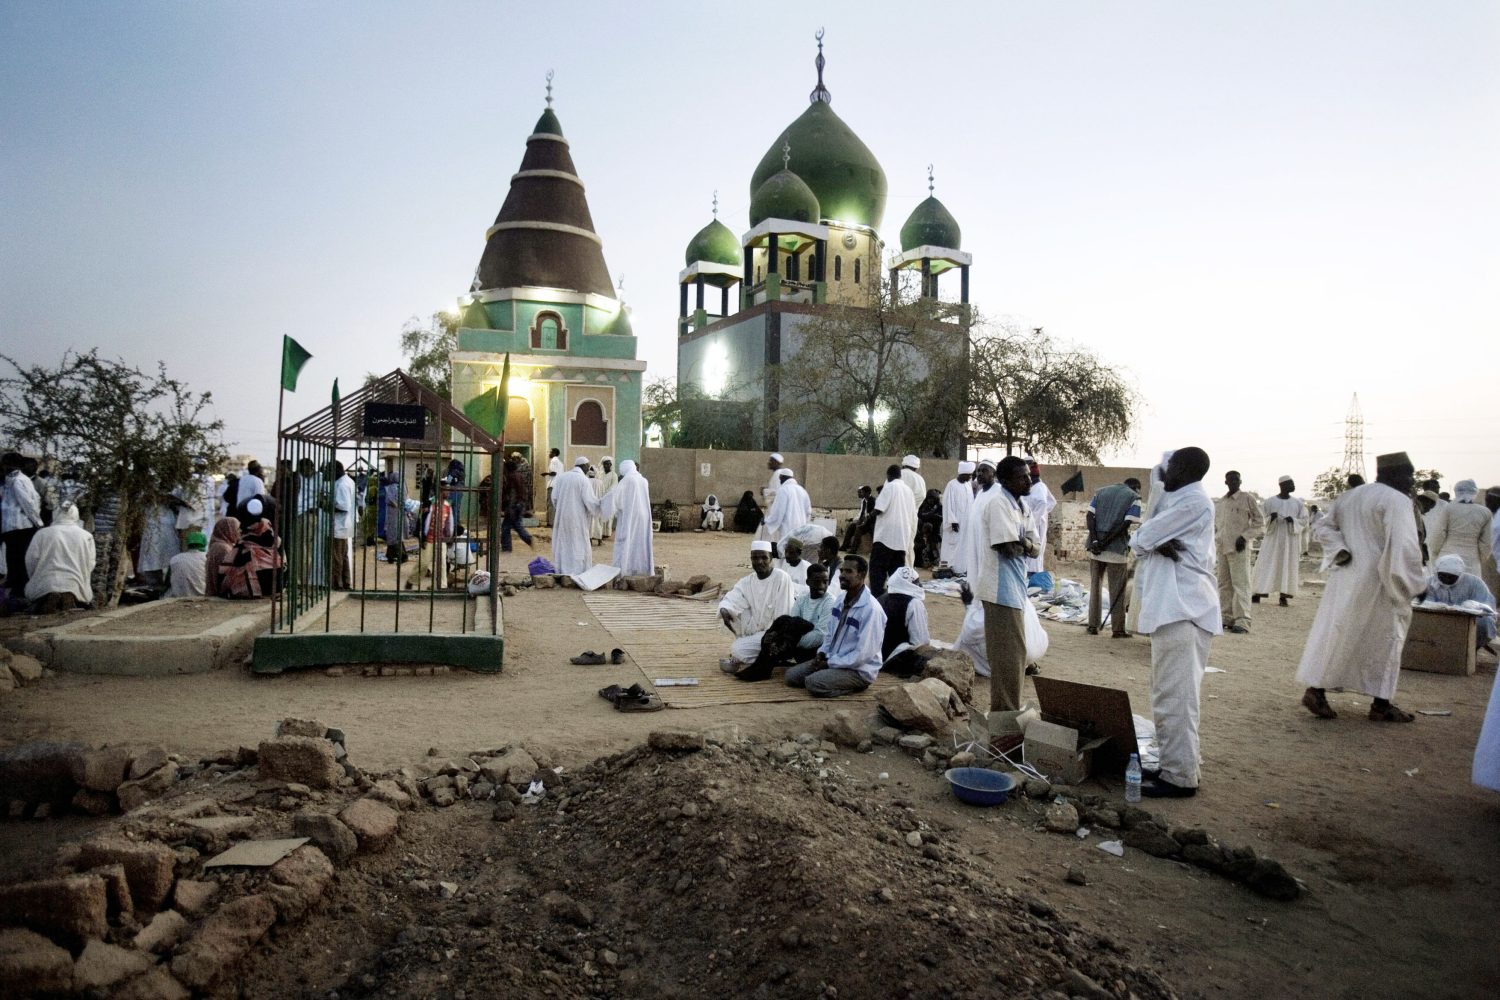 khartoum hub for islamist africa